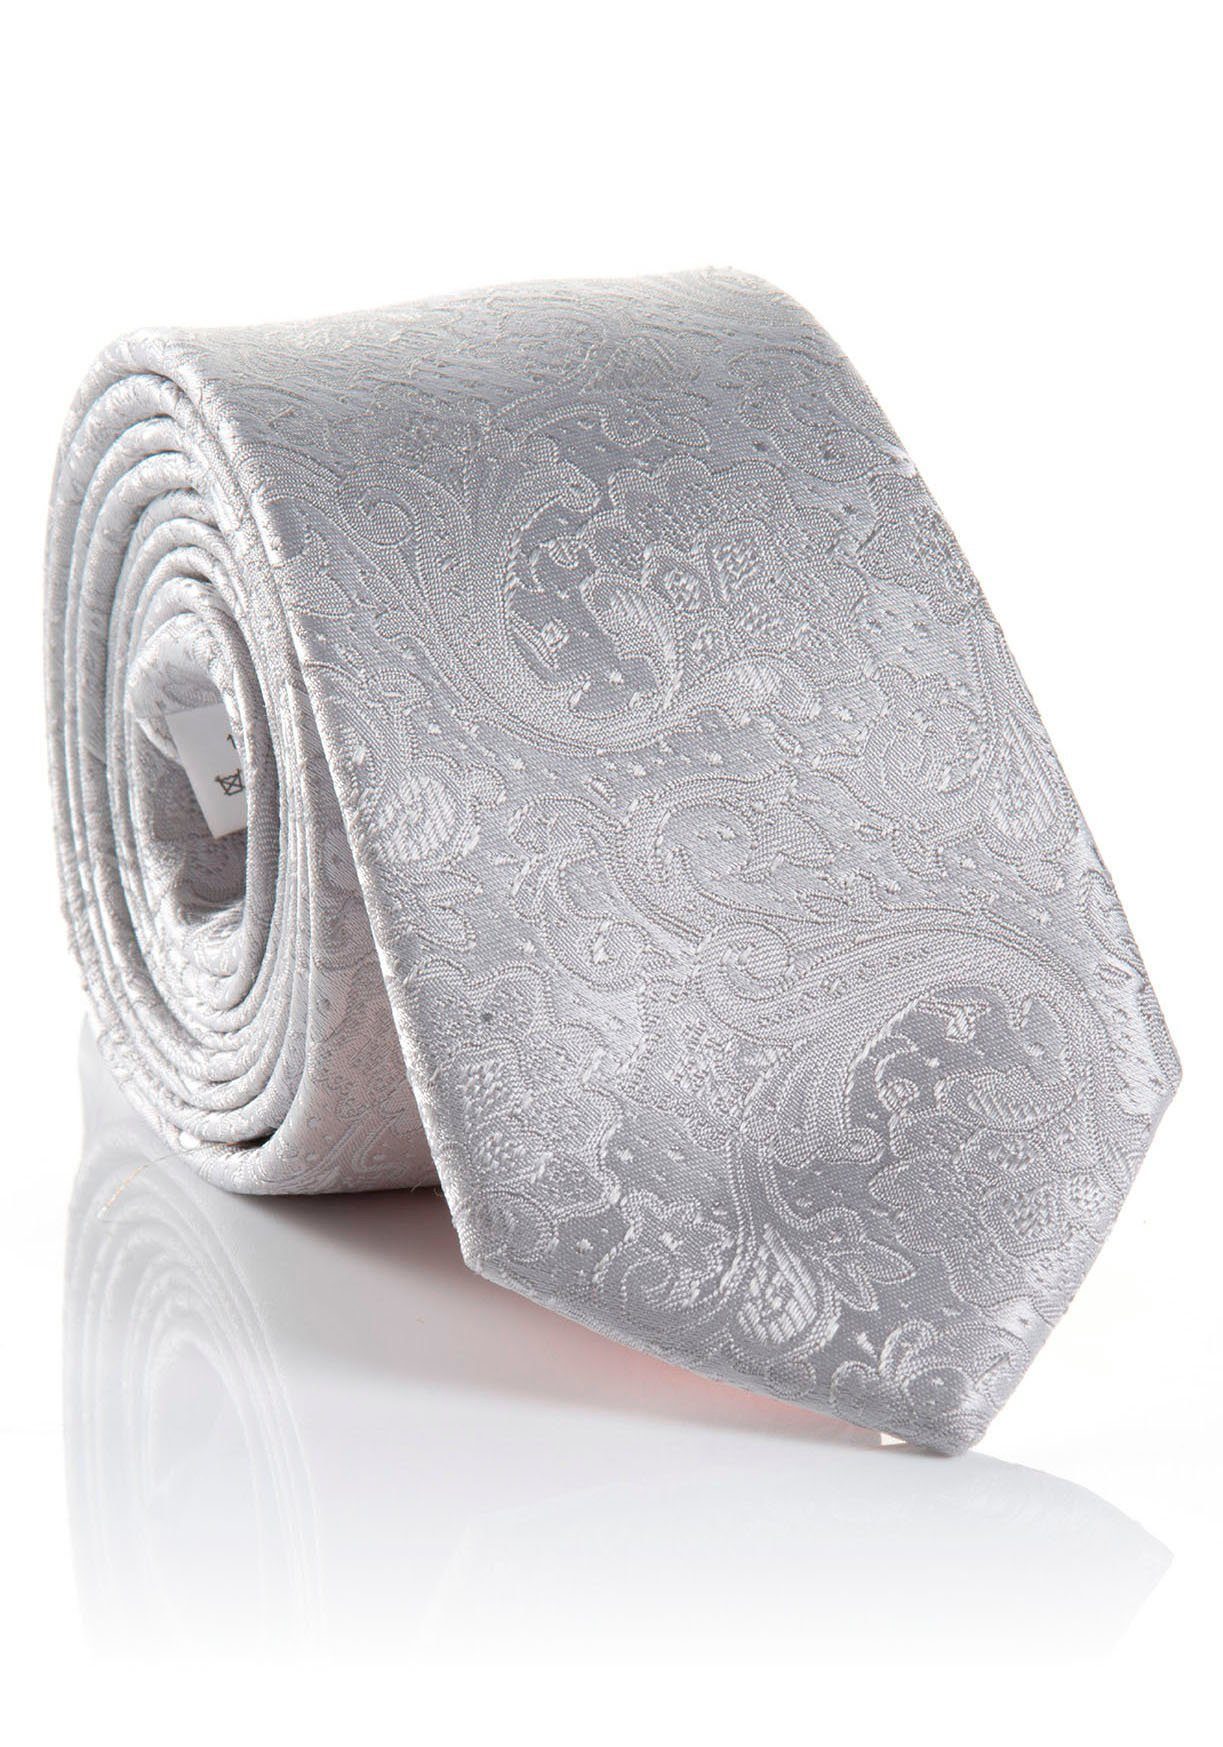 MONTI Krawatte LELIO Krawatte aus reiner Seide, Paisley-Muster silver | Breite Krawatten